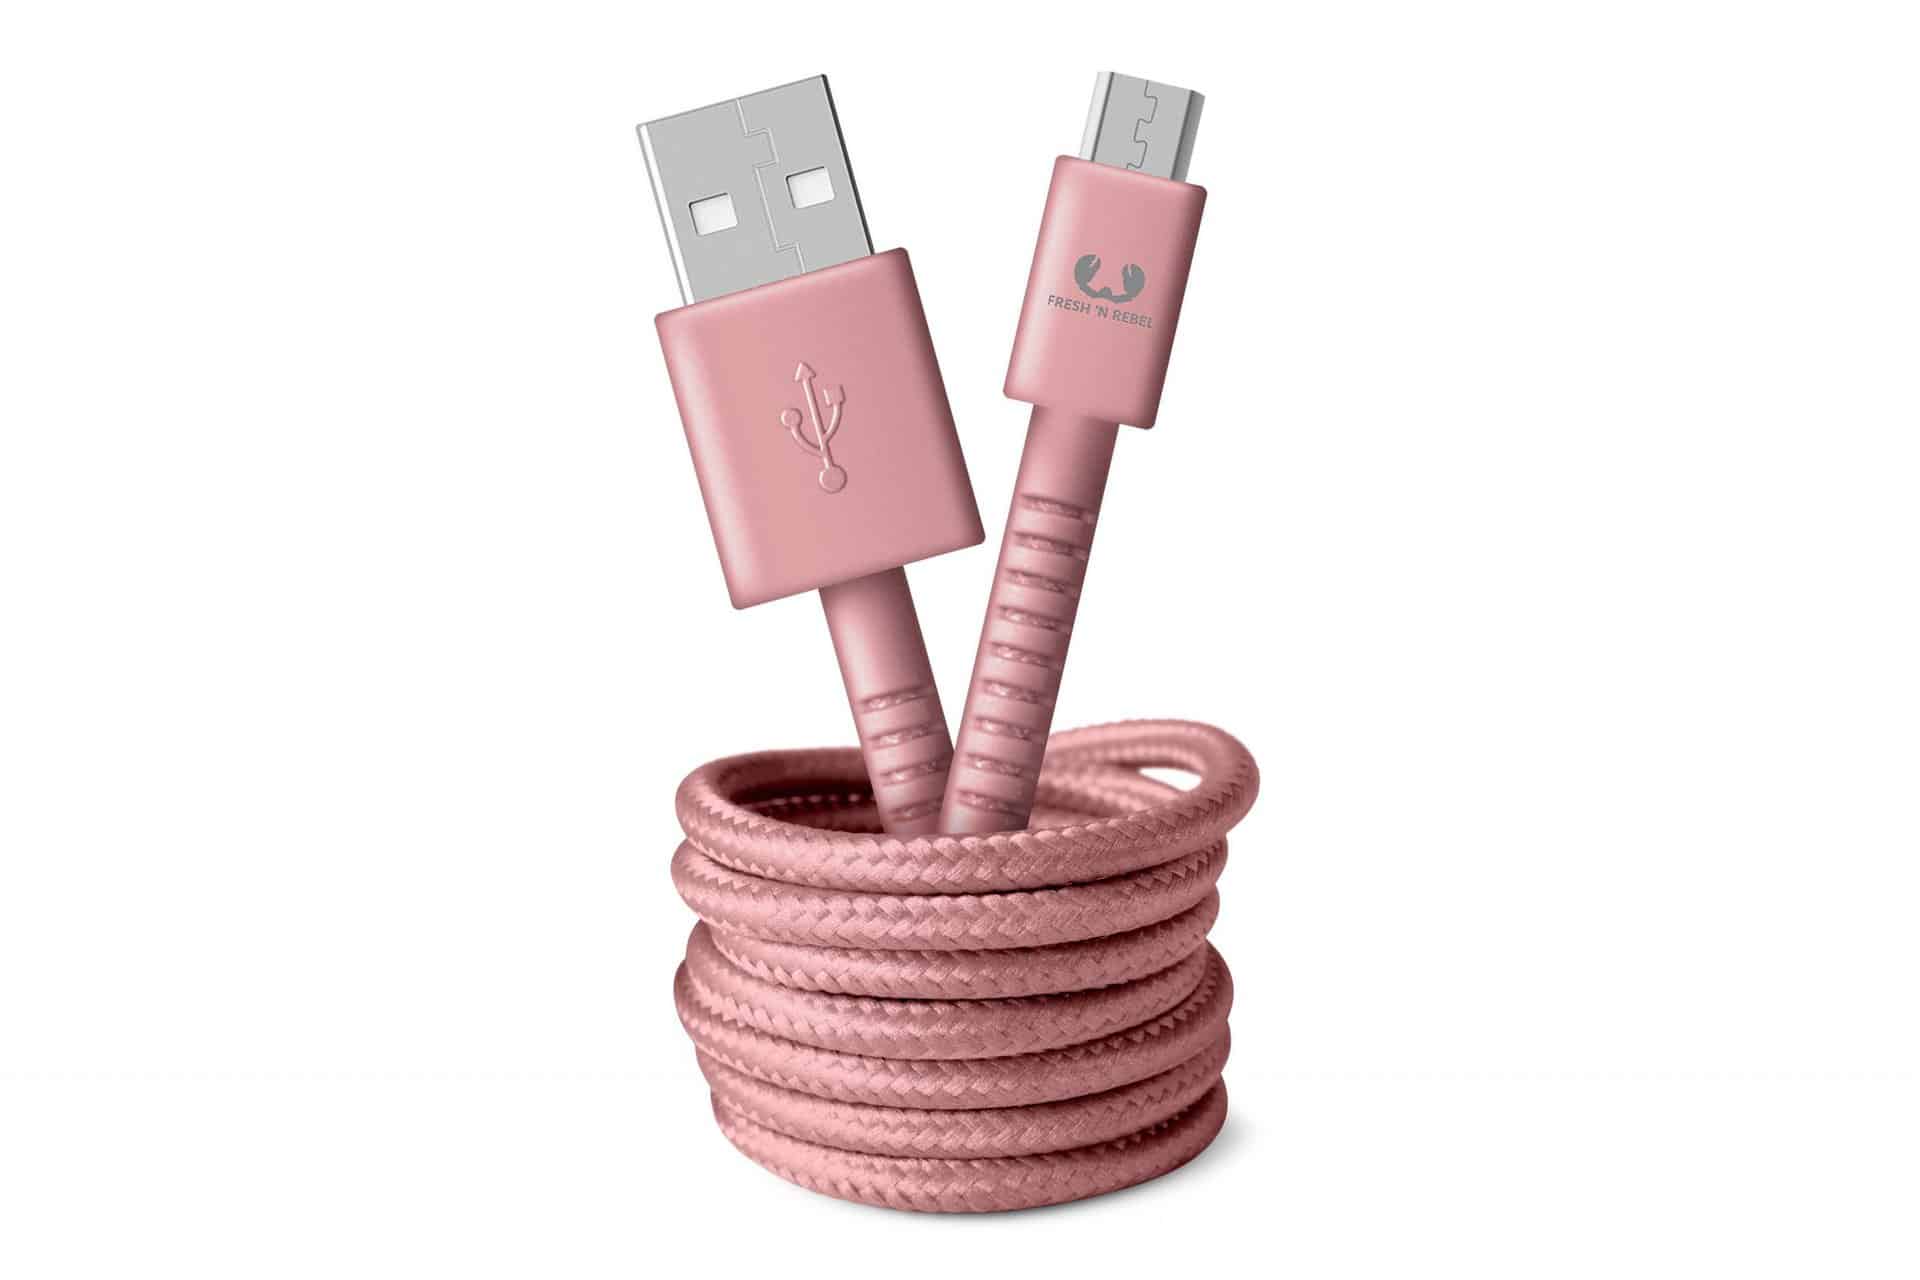 USB Micro USB Cable Colour Fresh and Rebel